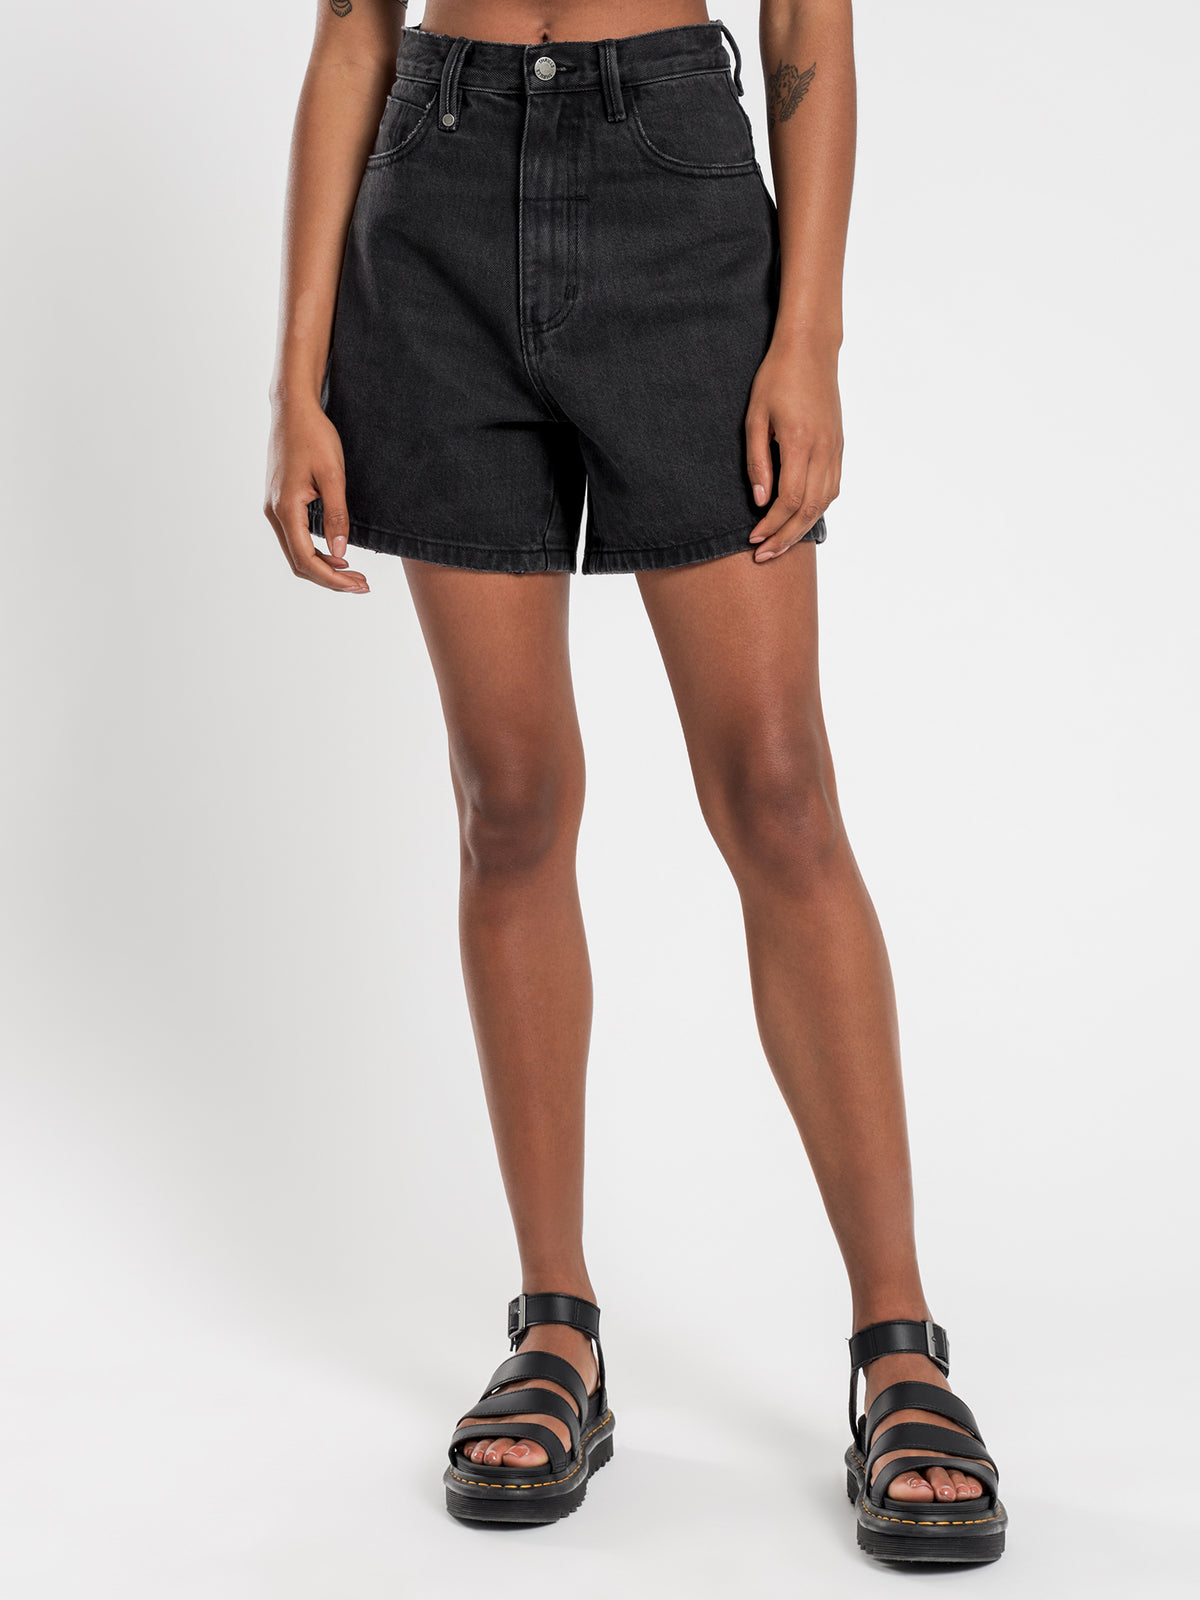 Koko Denim Shorts in Faded Black